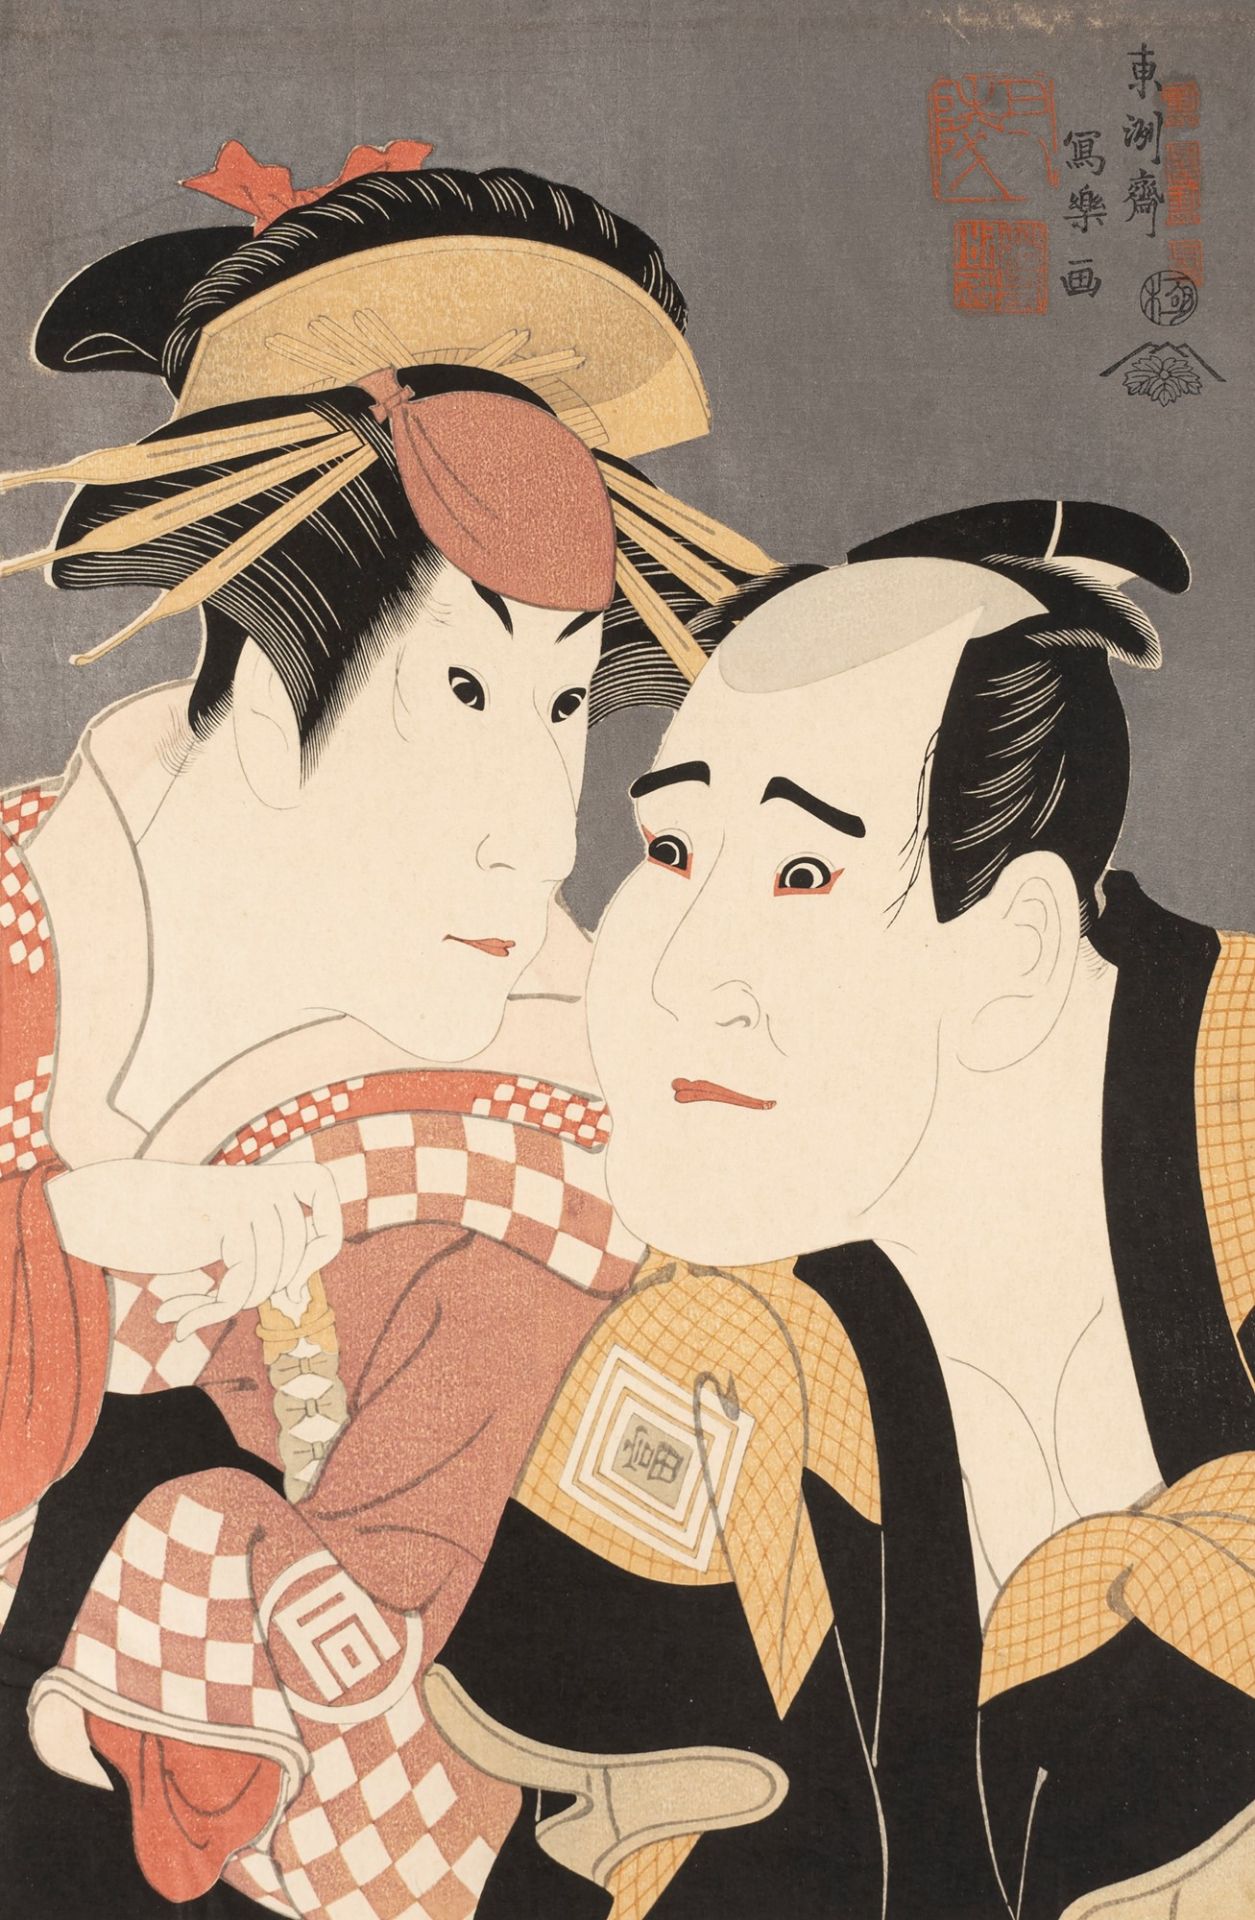 Sharaku - Five woodcuts representing theatrical masks, Japan, Taisho period